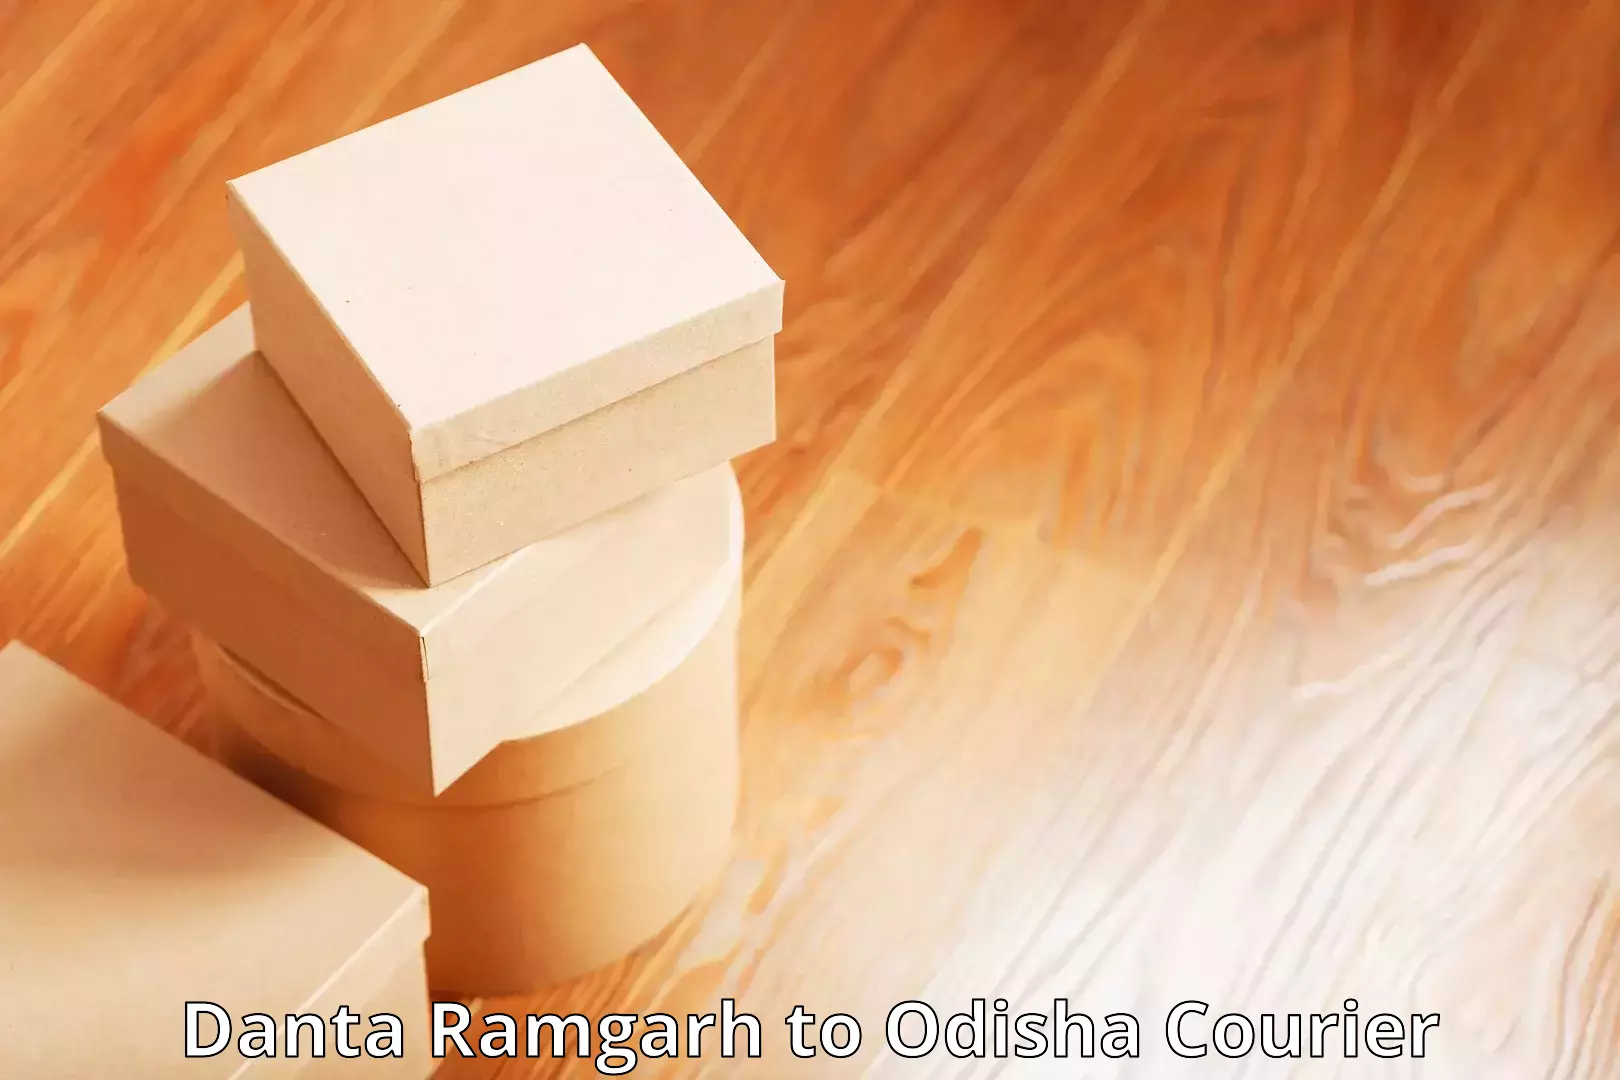 High-speed parcel service Danta Ramgarh to Bhadrak